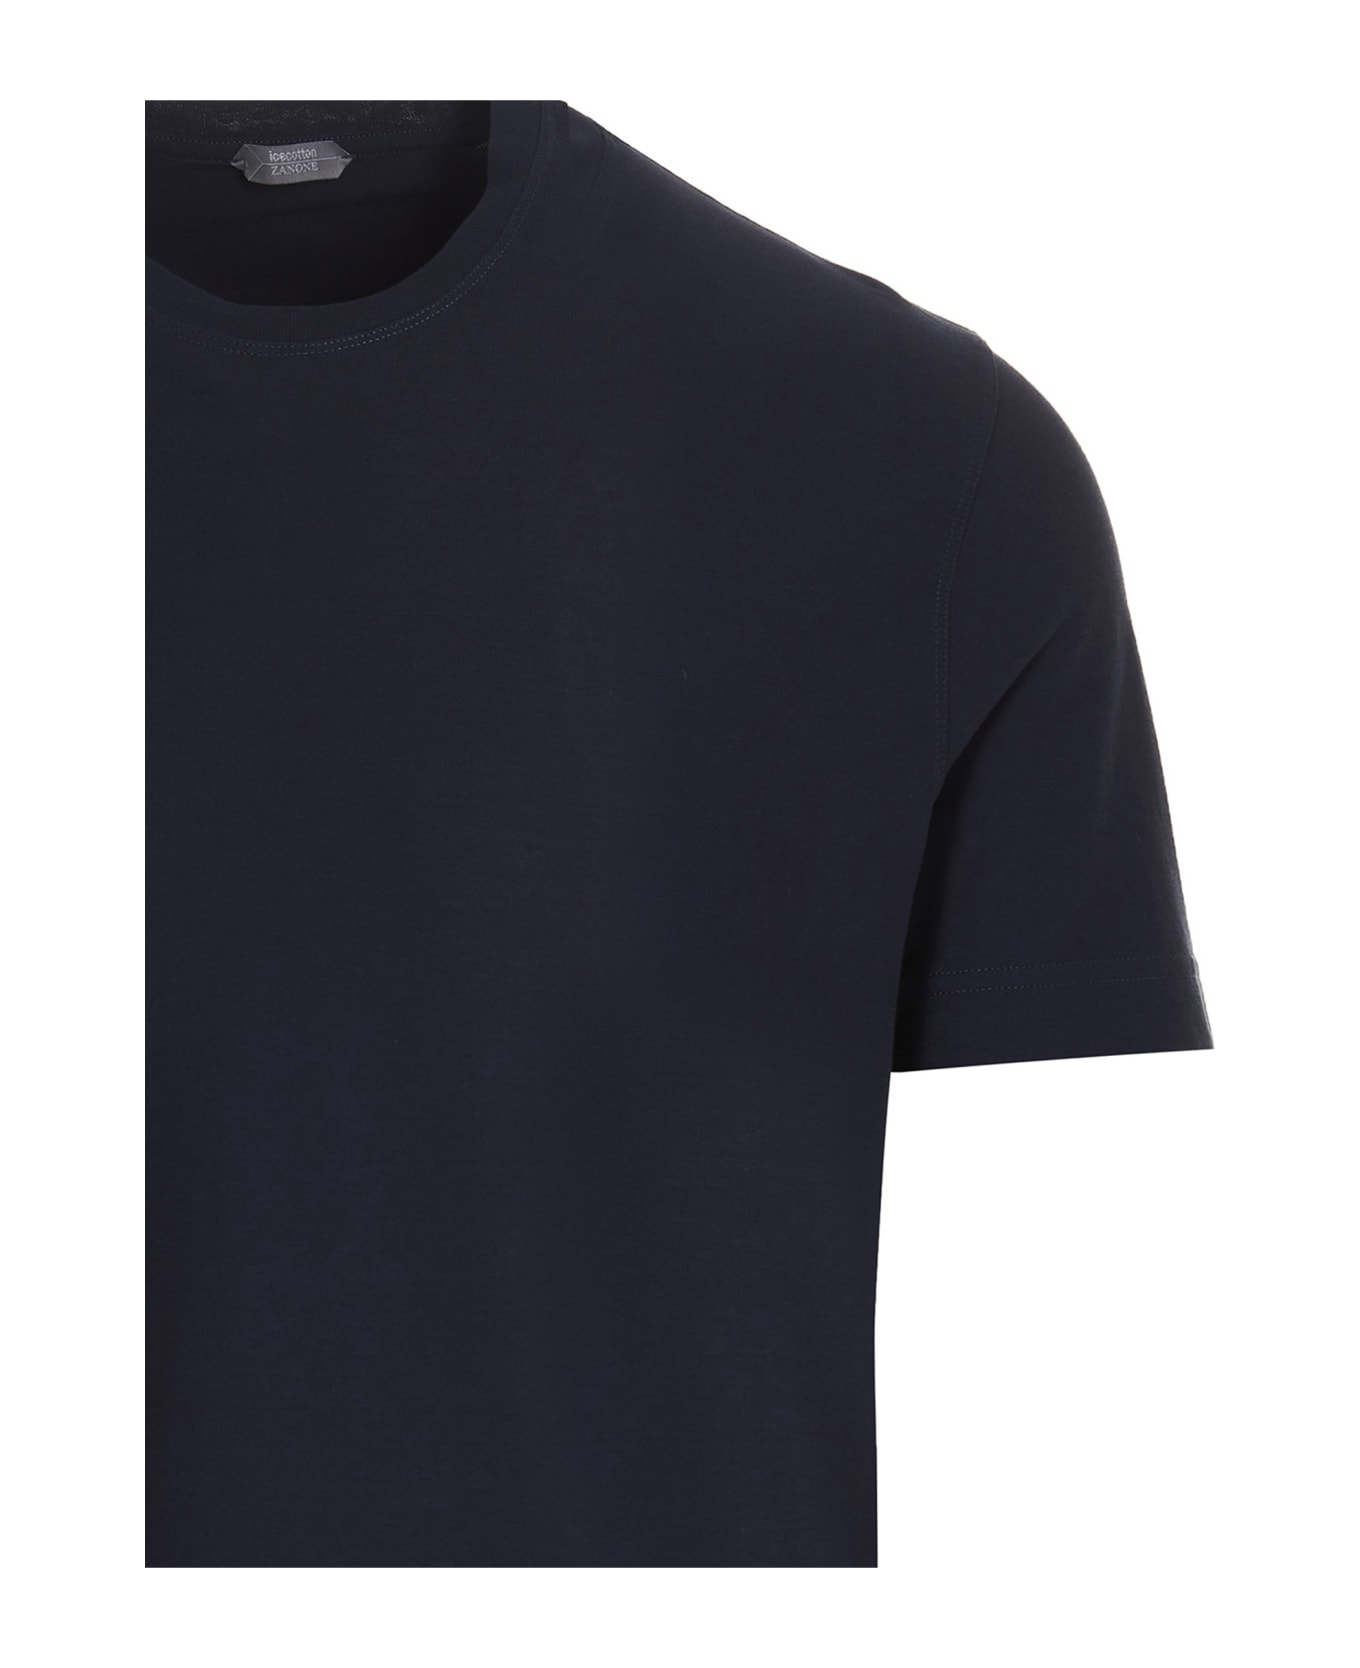 Zanone Ice Cotton T-shirt - Blue